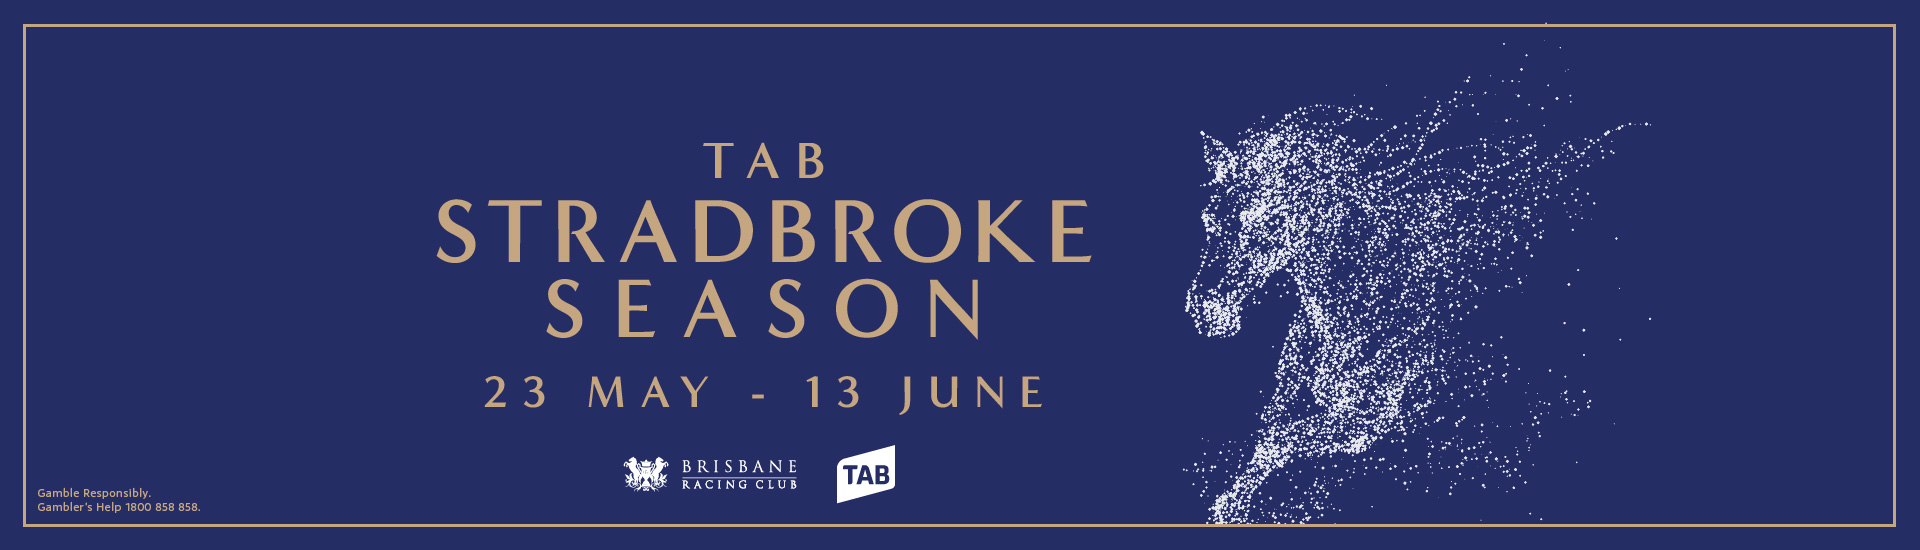 Stradbroke Season Webpage Banner